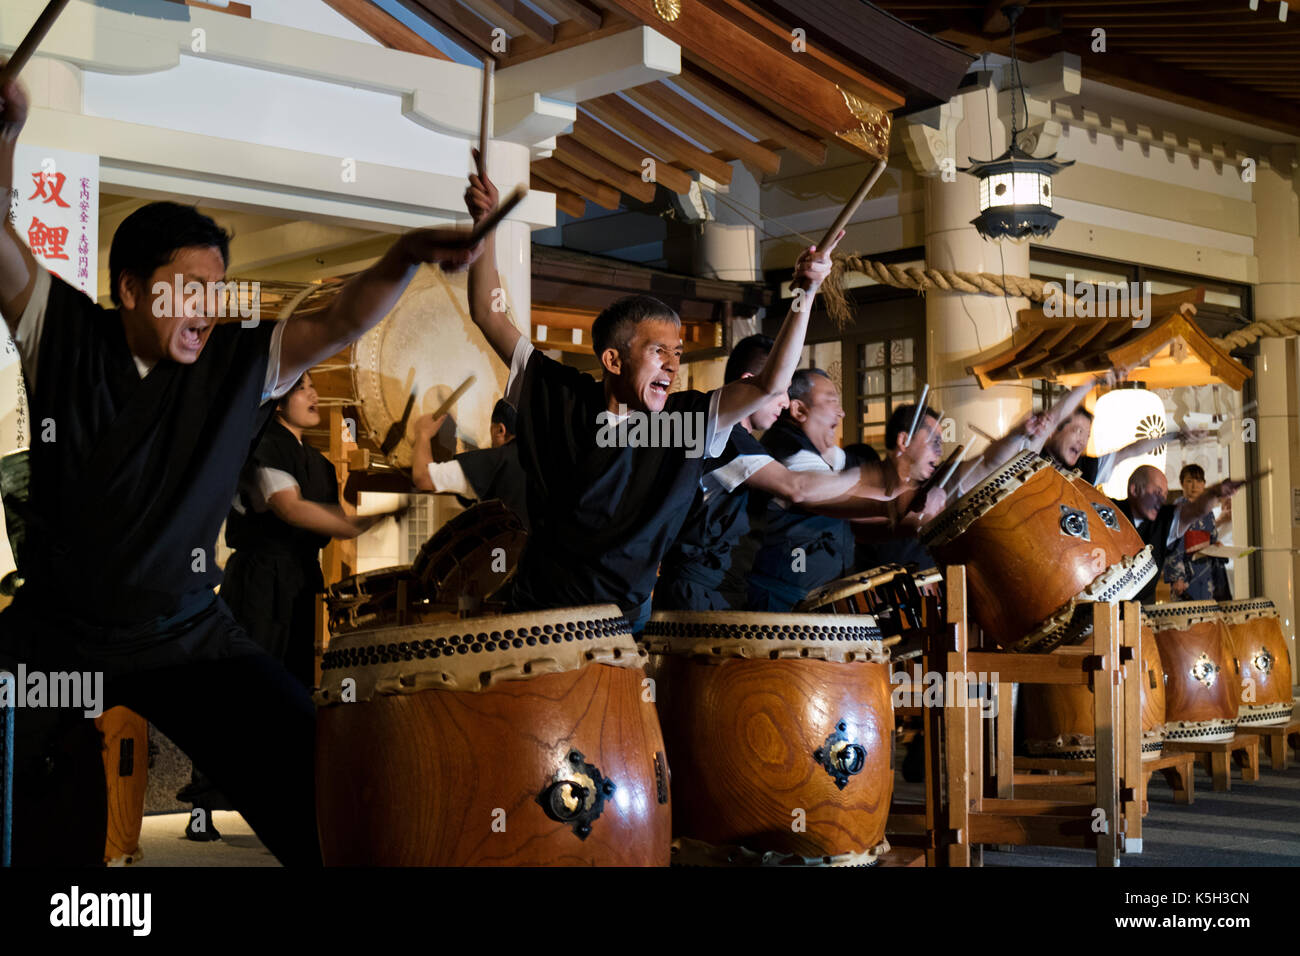 Hiroshima, Japan - 27. Mai 2017: Taiko drumming Truppe durchführen am Mantō Mitama Matsuri in Hiroshima - Gokoku jinja Schrein Stockfoto